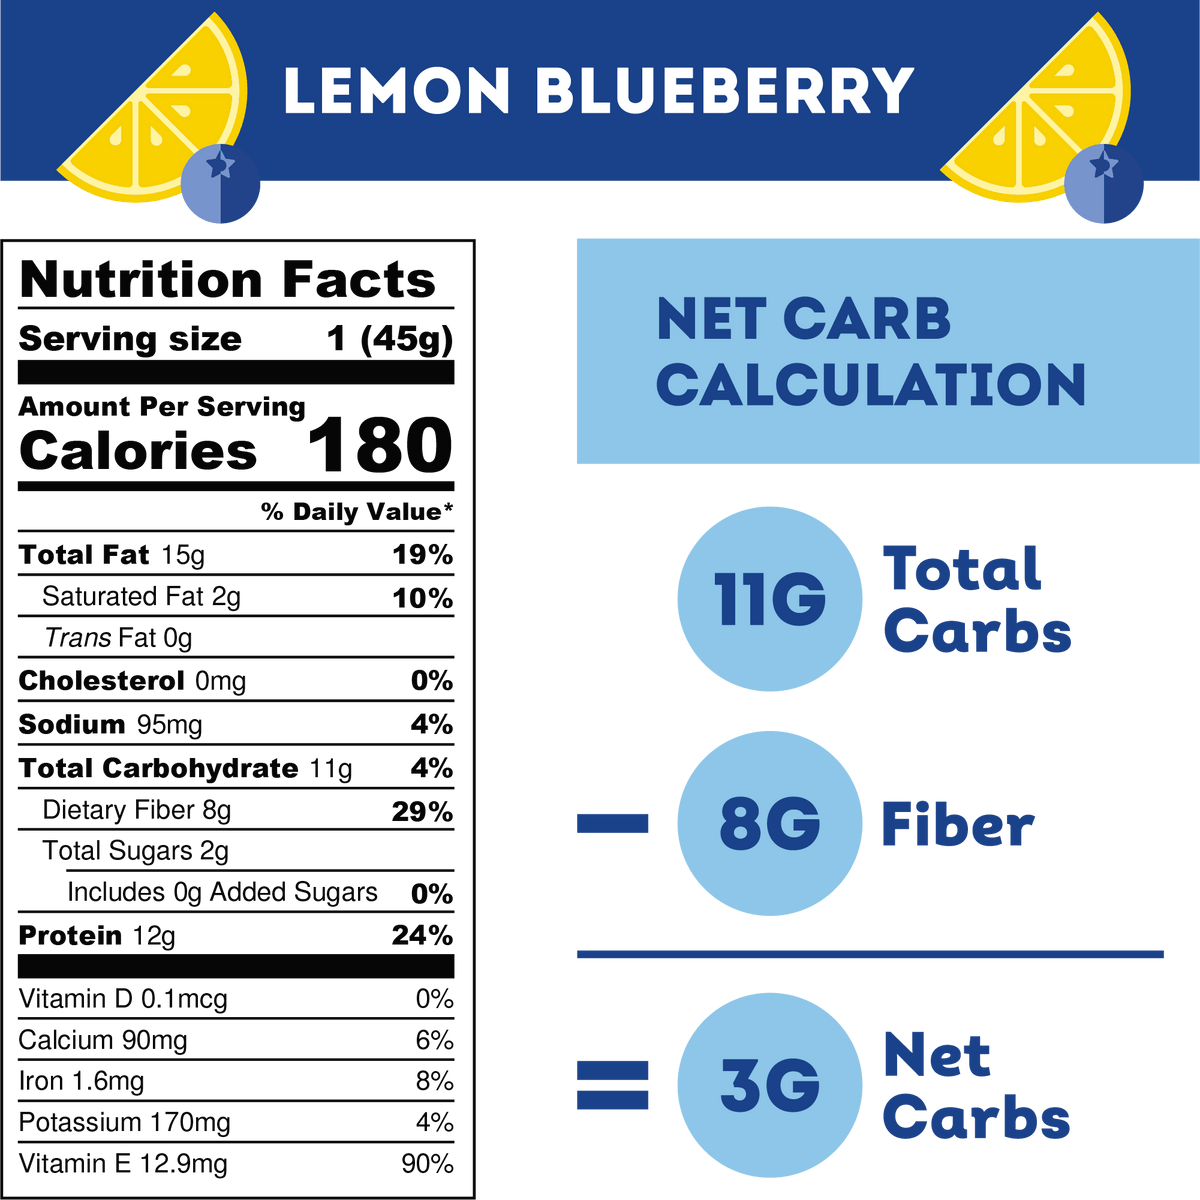 [IQ Bar] Lemon Blueberry | 1.6oz | 1 Bar